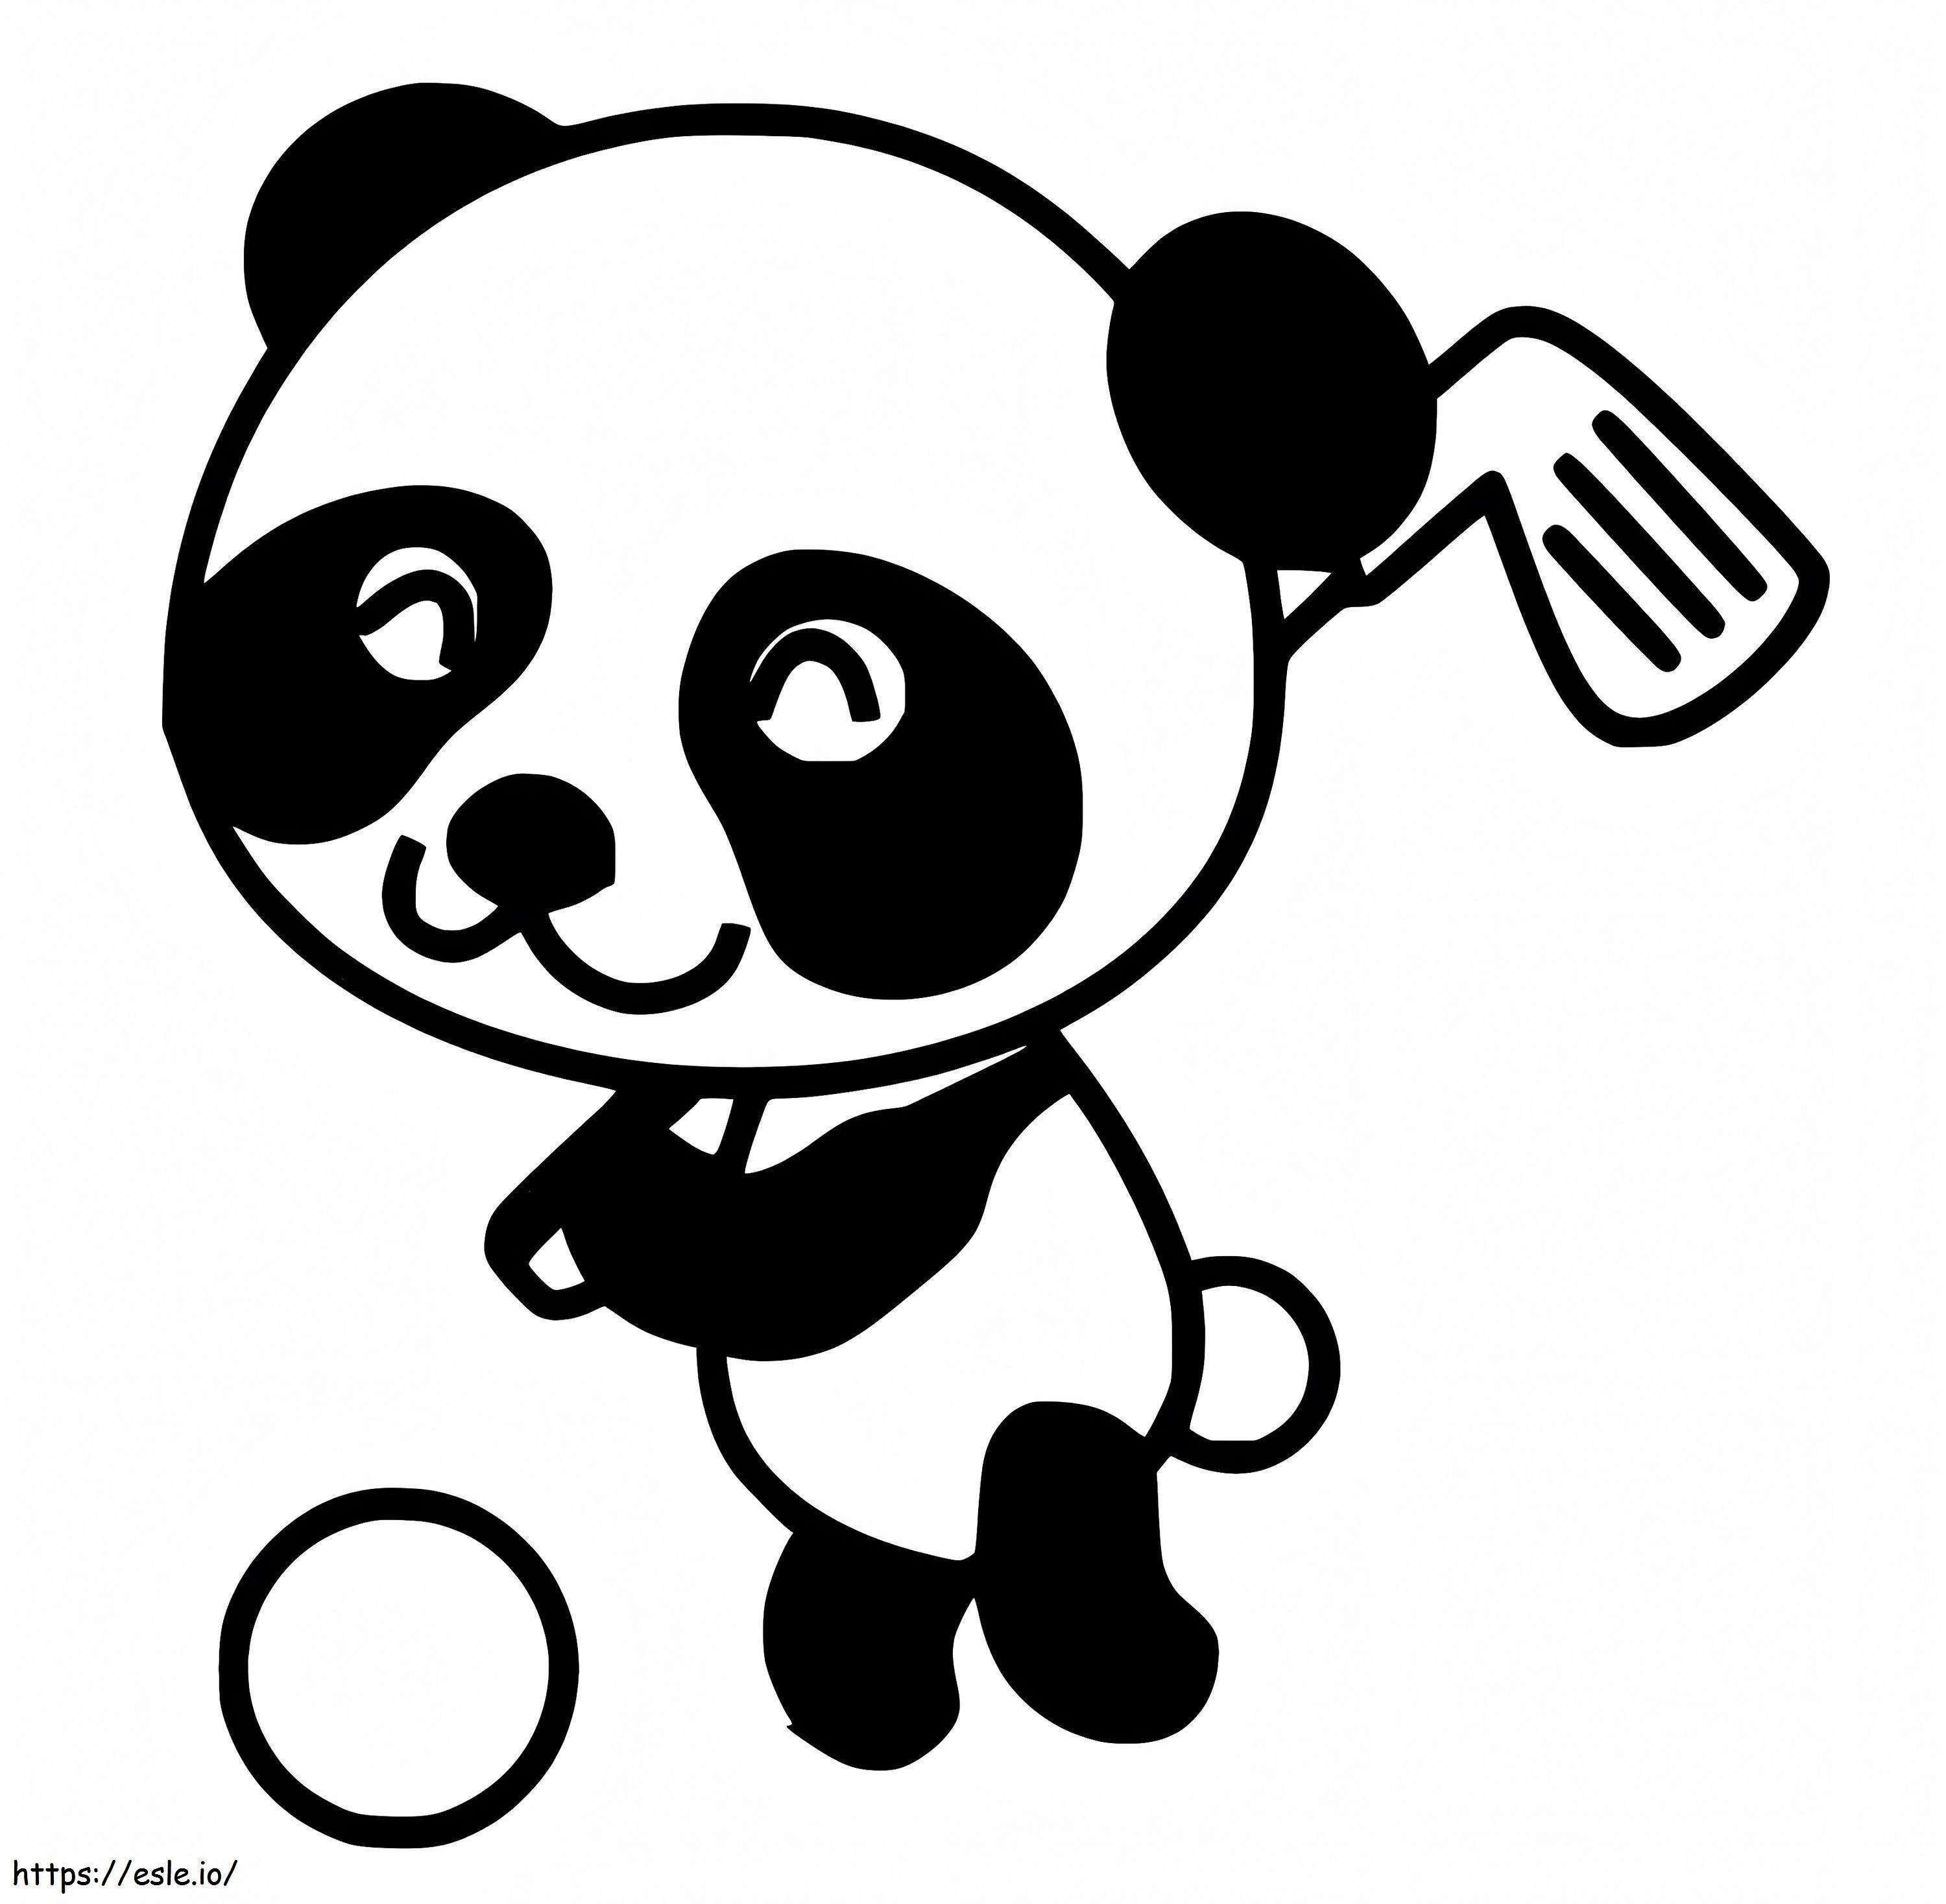 Cute Panda Playing Golf coloring page